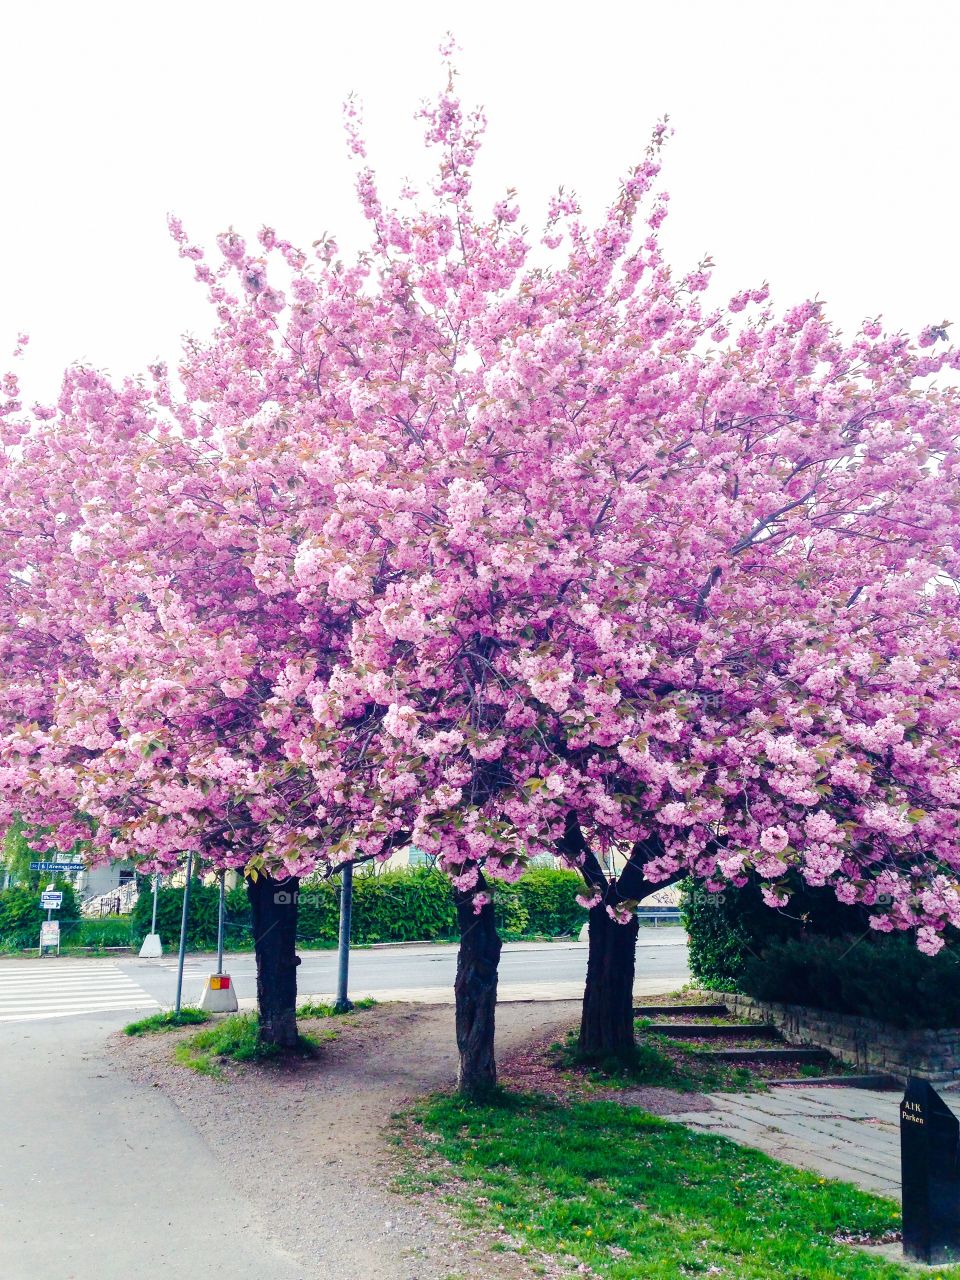 pink cherry blossom trees